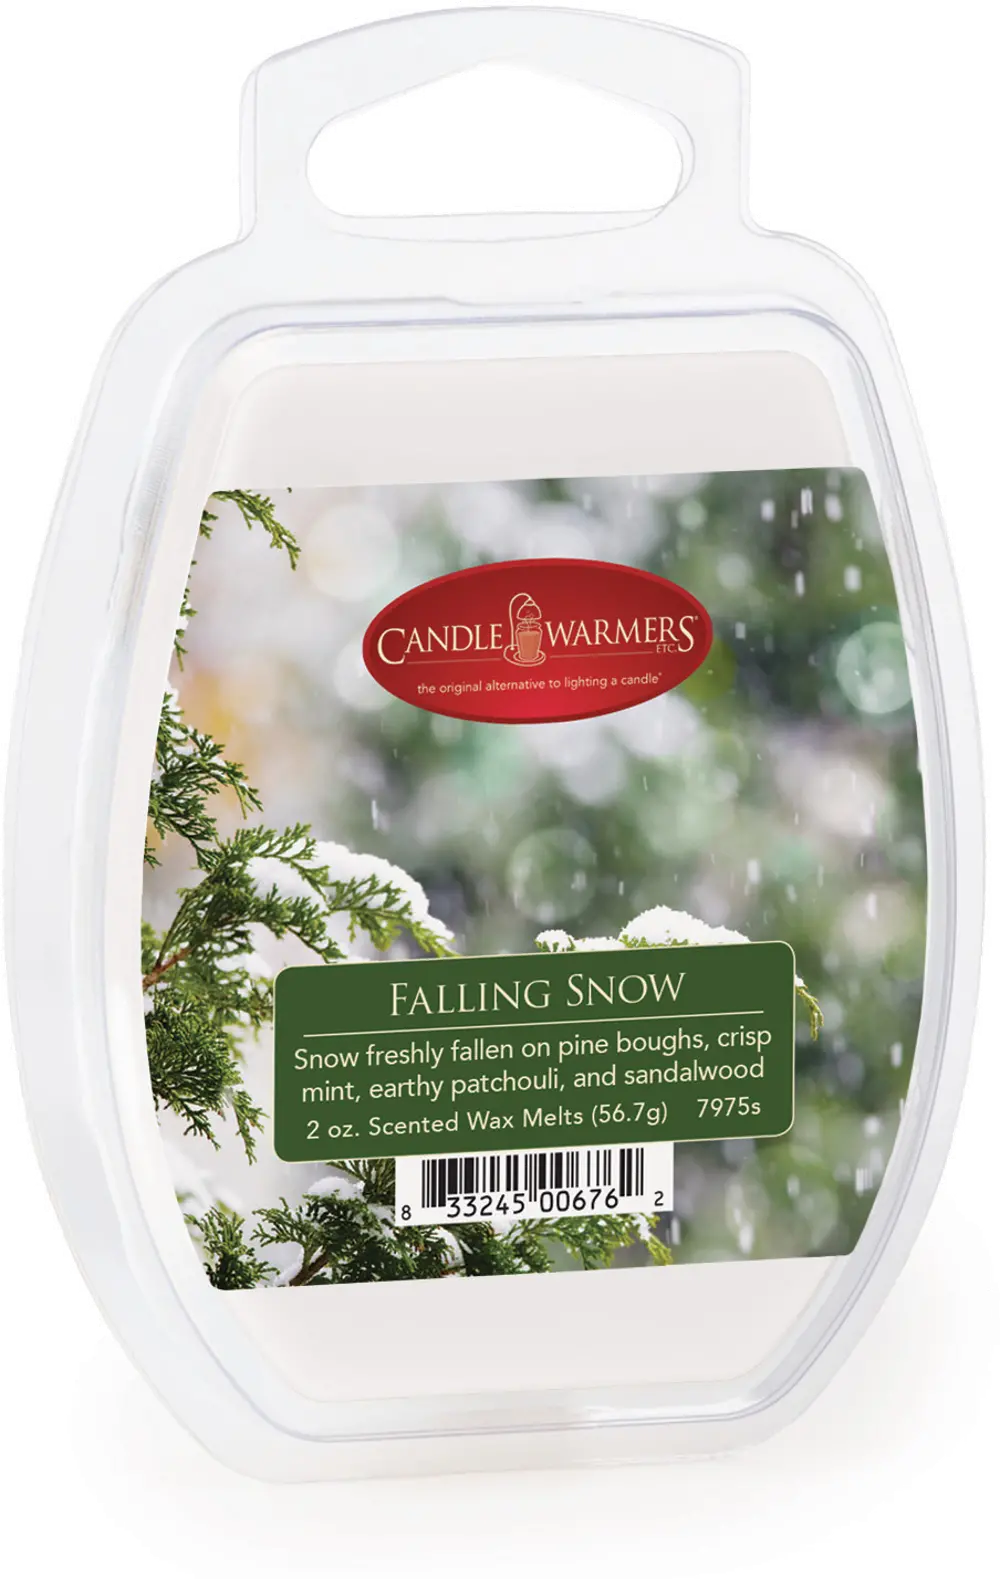 Falling Snow 2oz Wax Melt - Candle Warmers-1